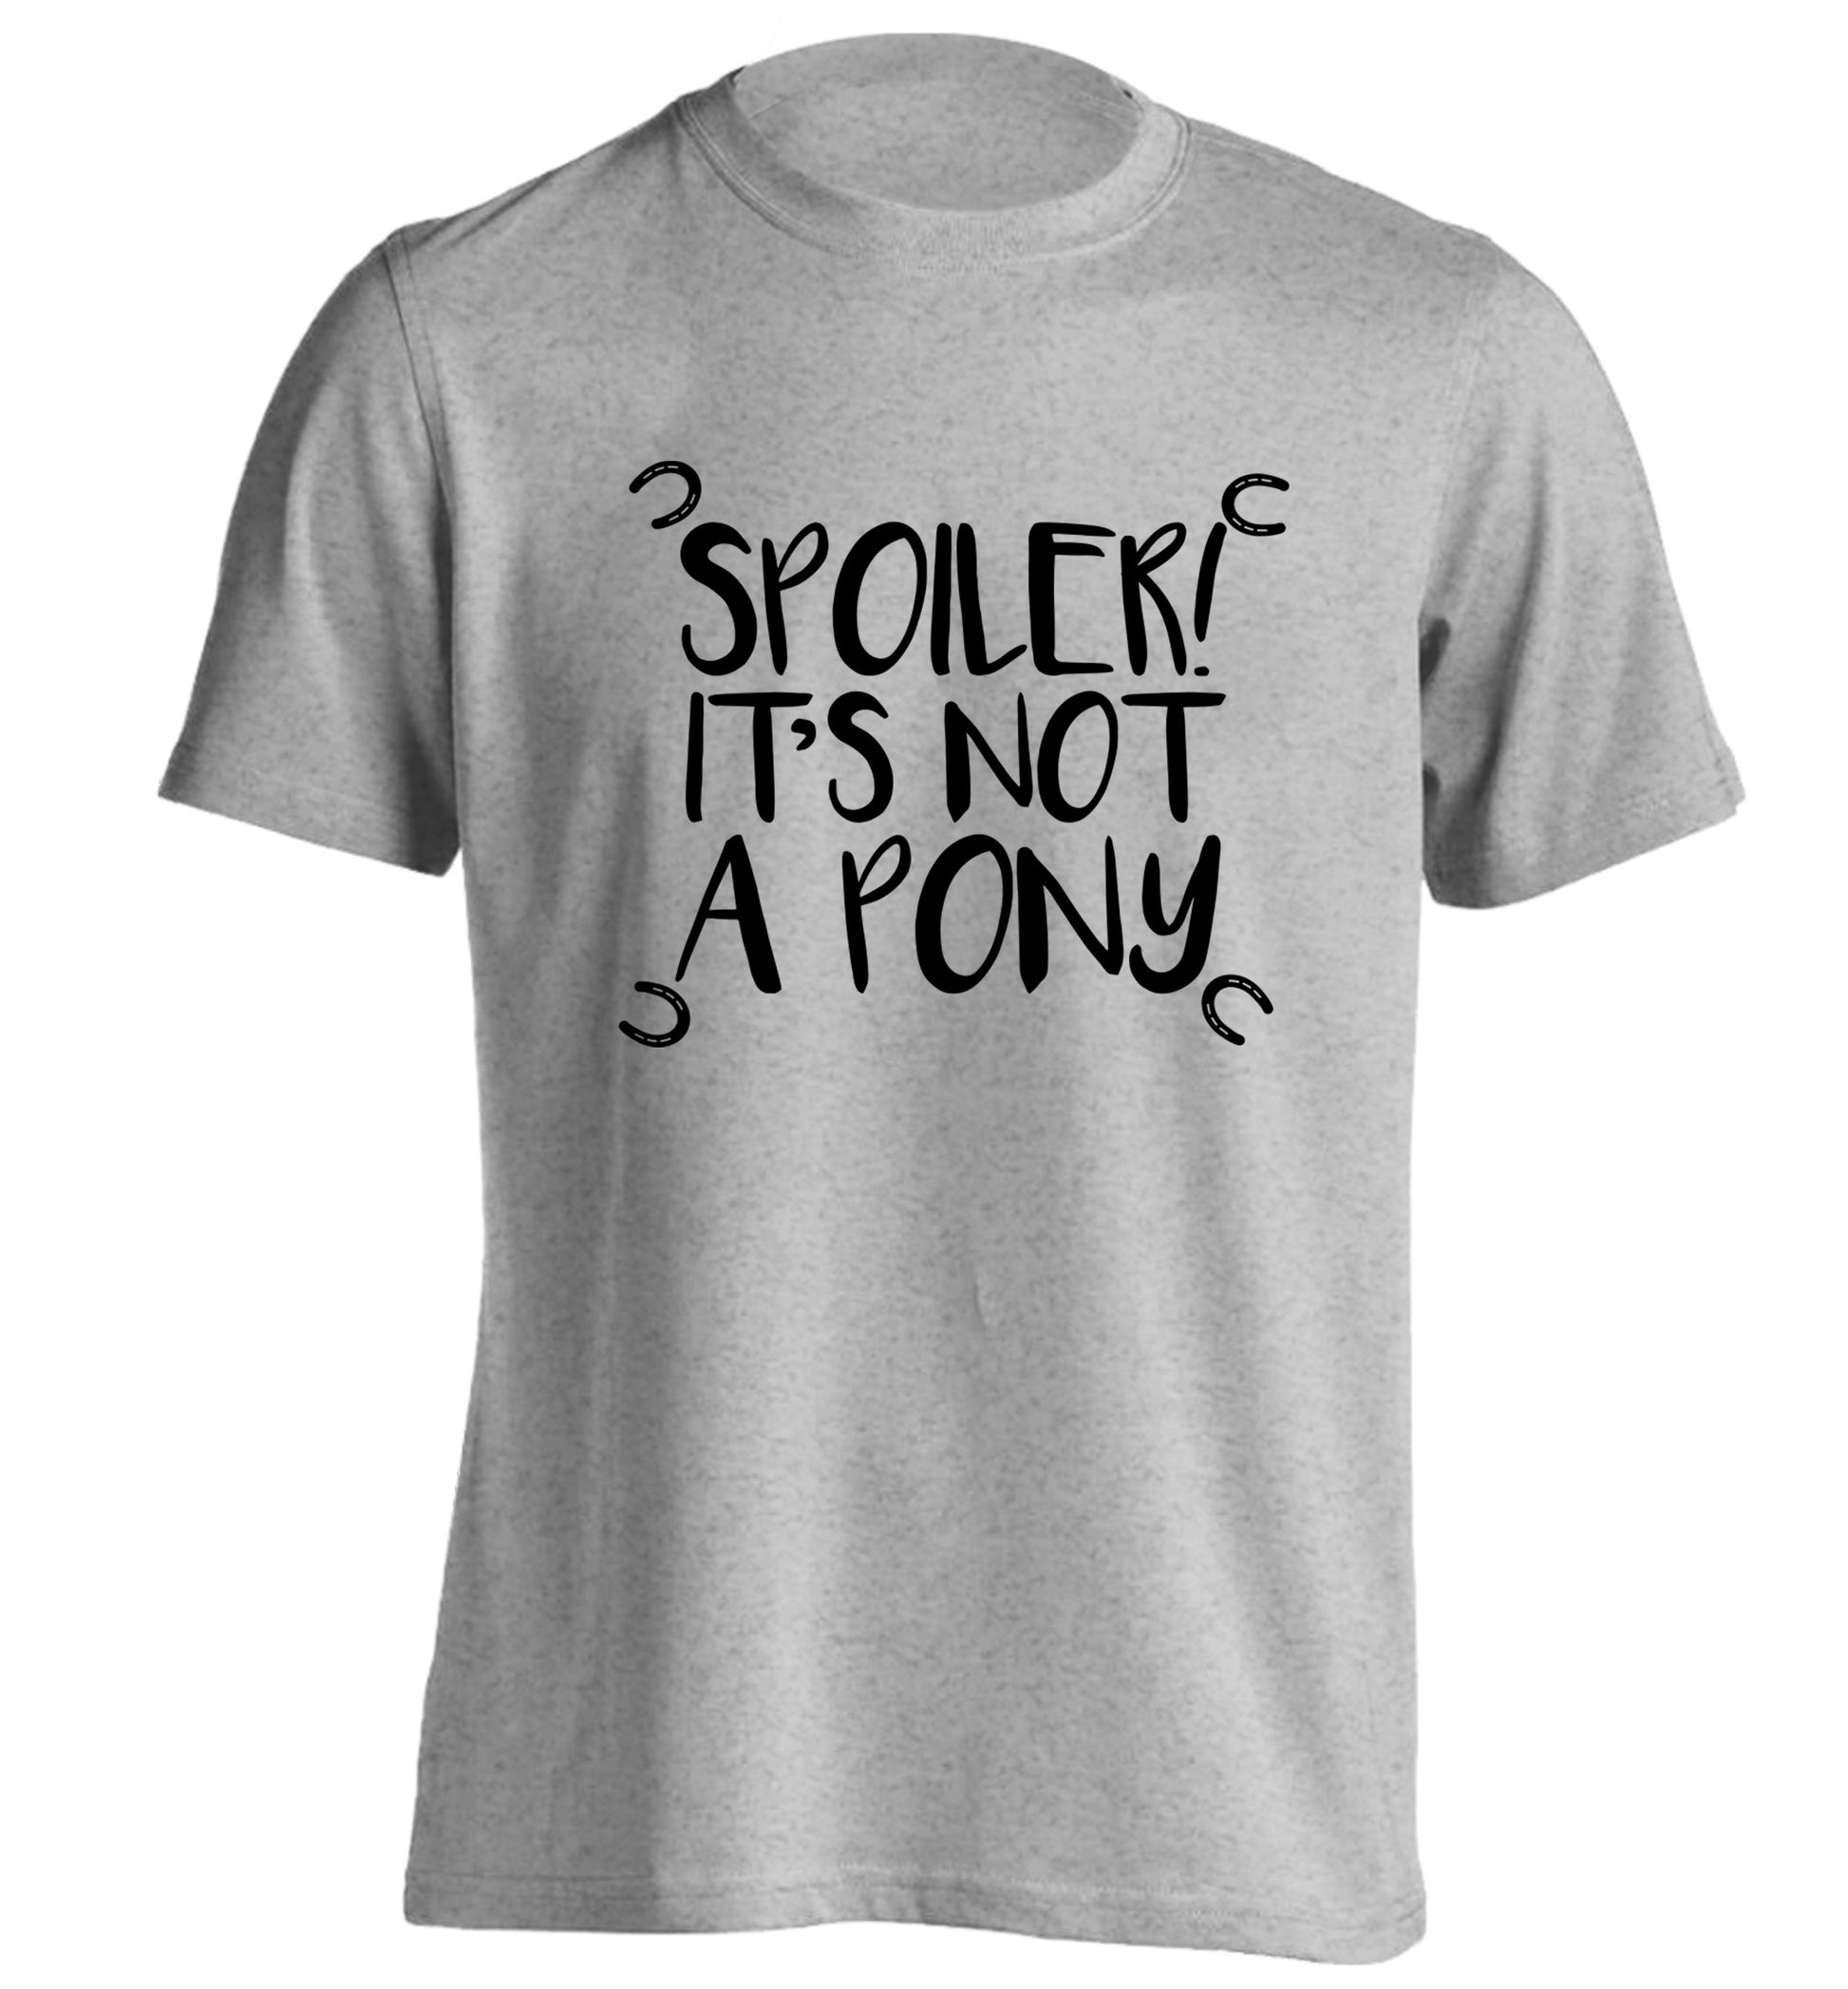 Spoiler it's not a pony adults unisex grey Tshirt 2XL